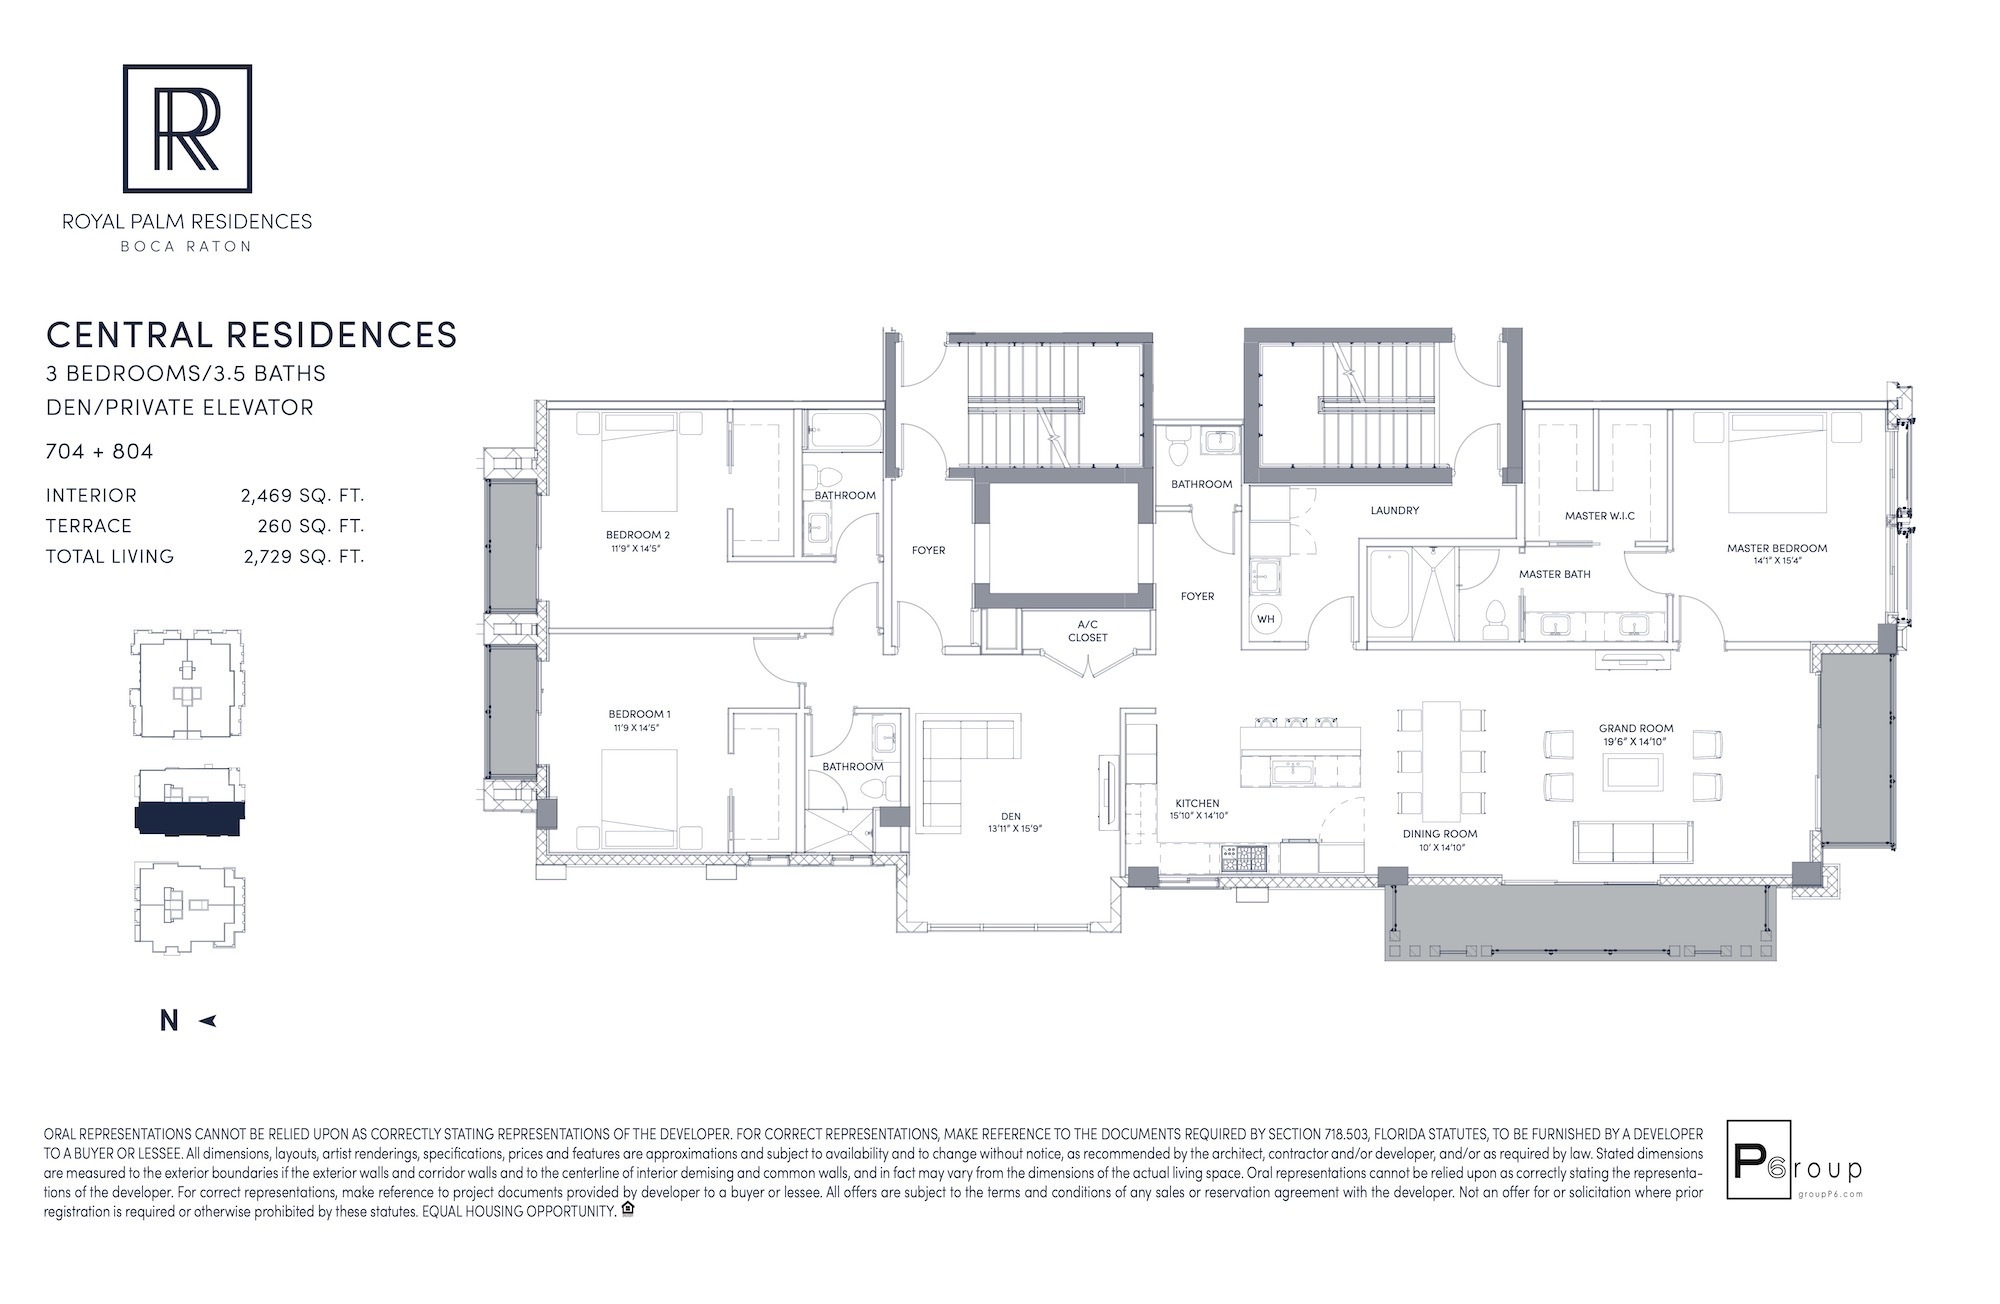 Floor Plan for Royal Palm Residences Floorplans, Central Residences 704 + 804